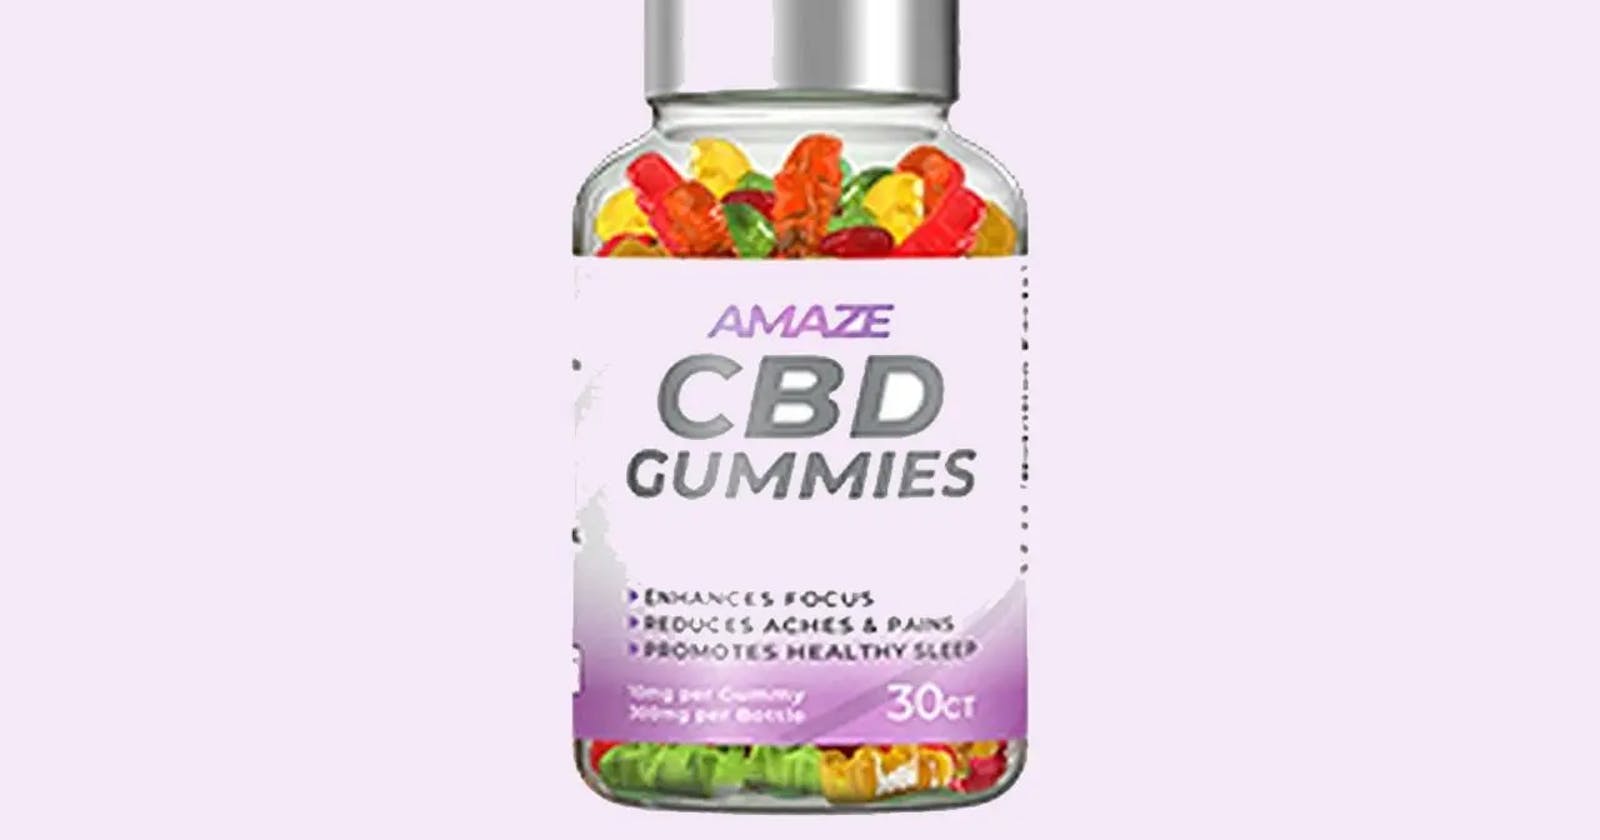 Amaze CBD Gummies Price, Reviews, Ingredients